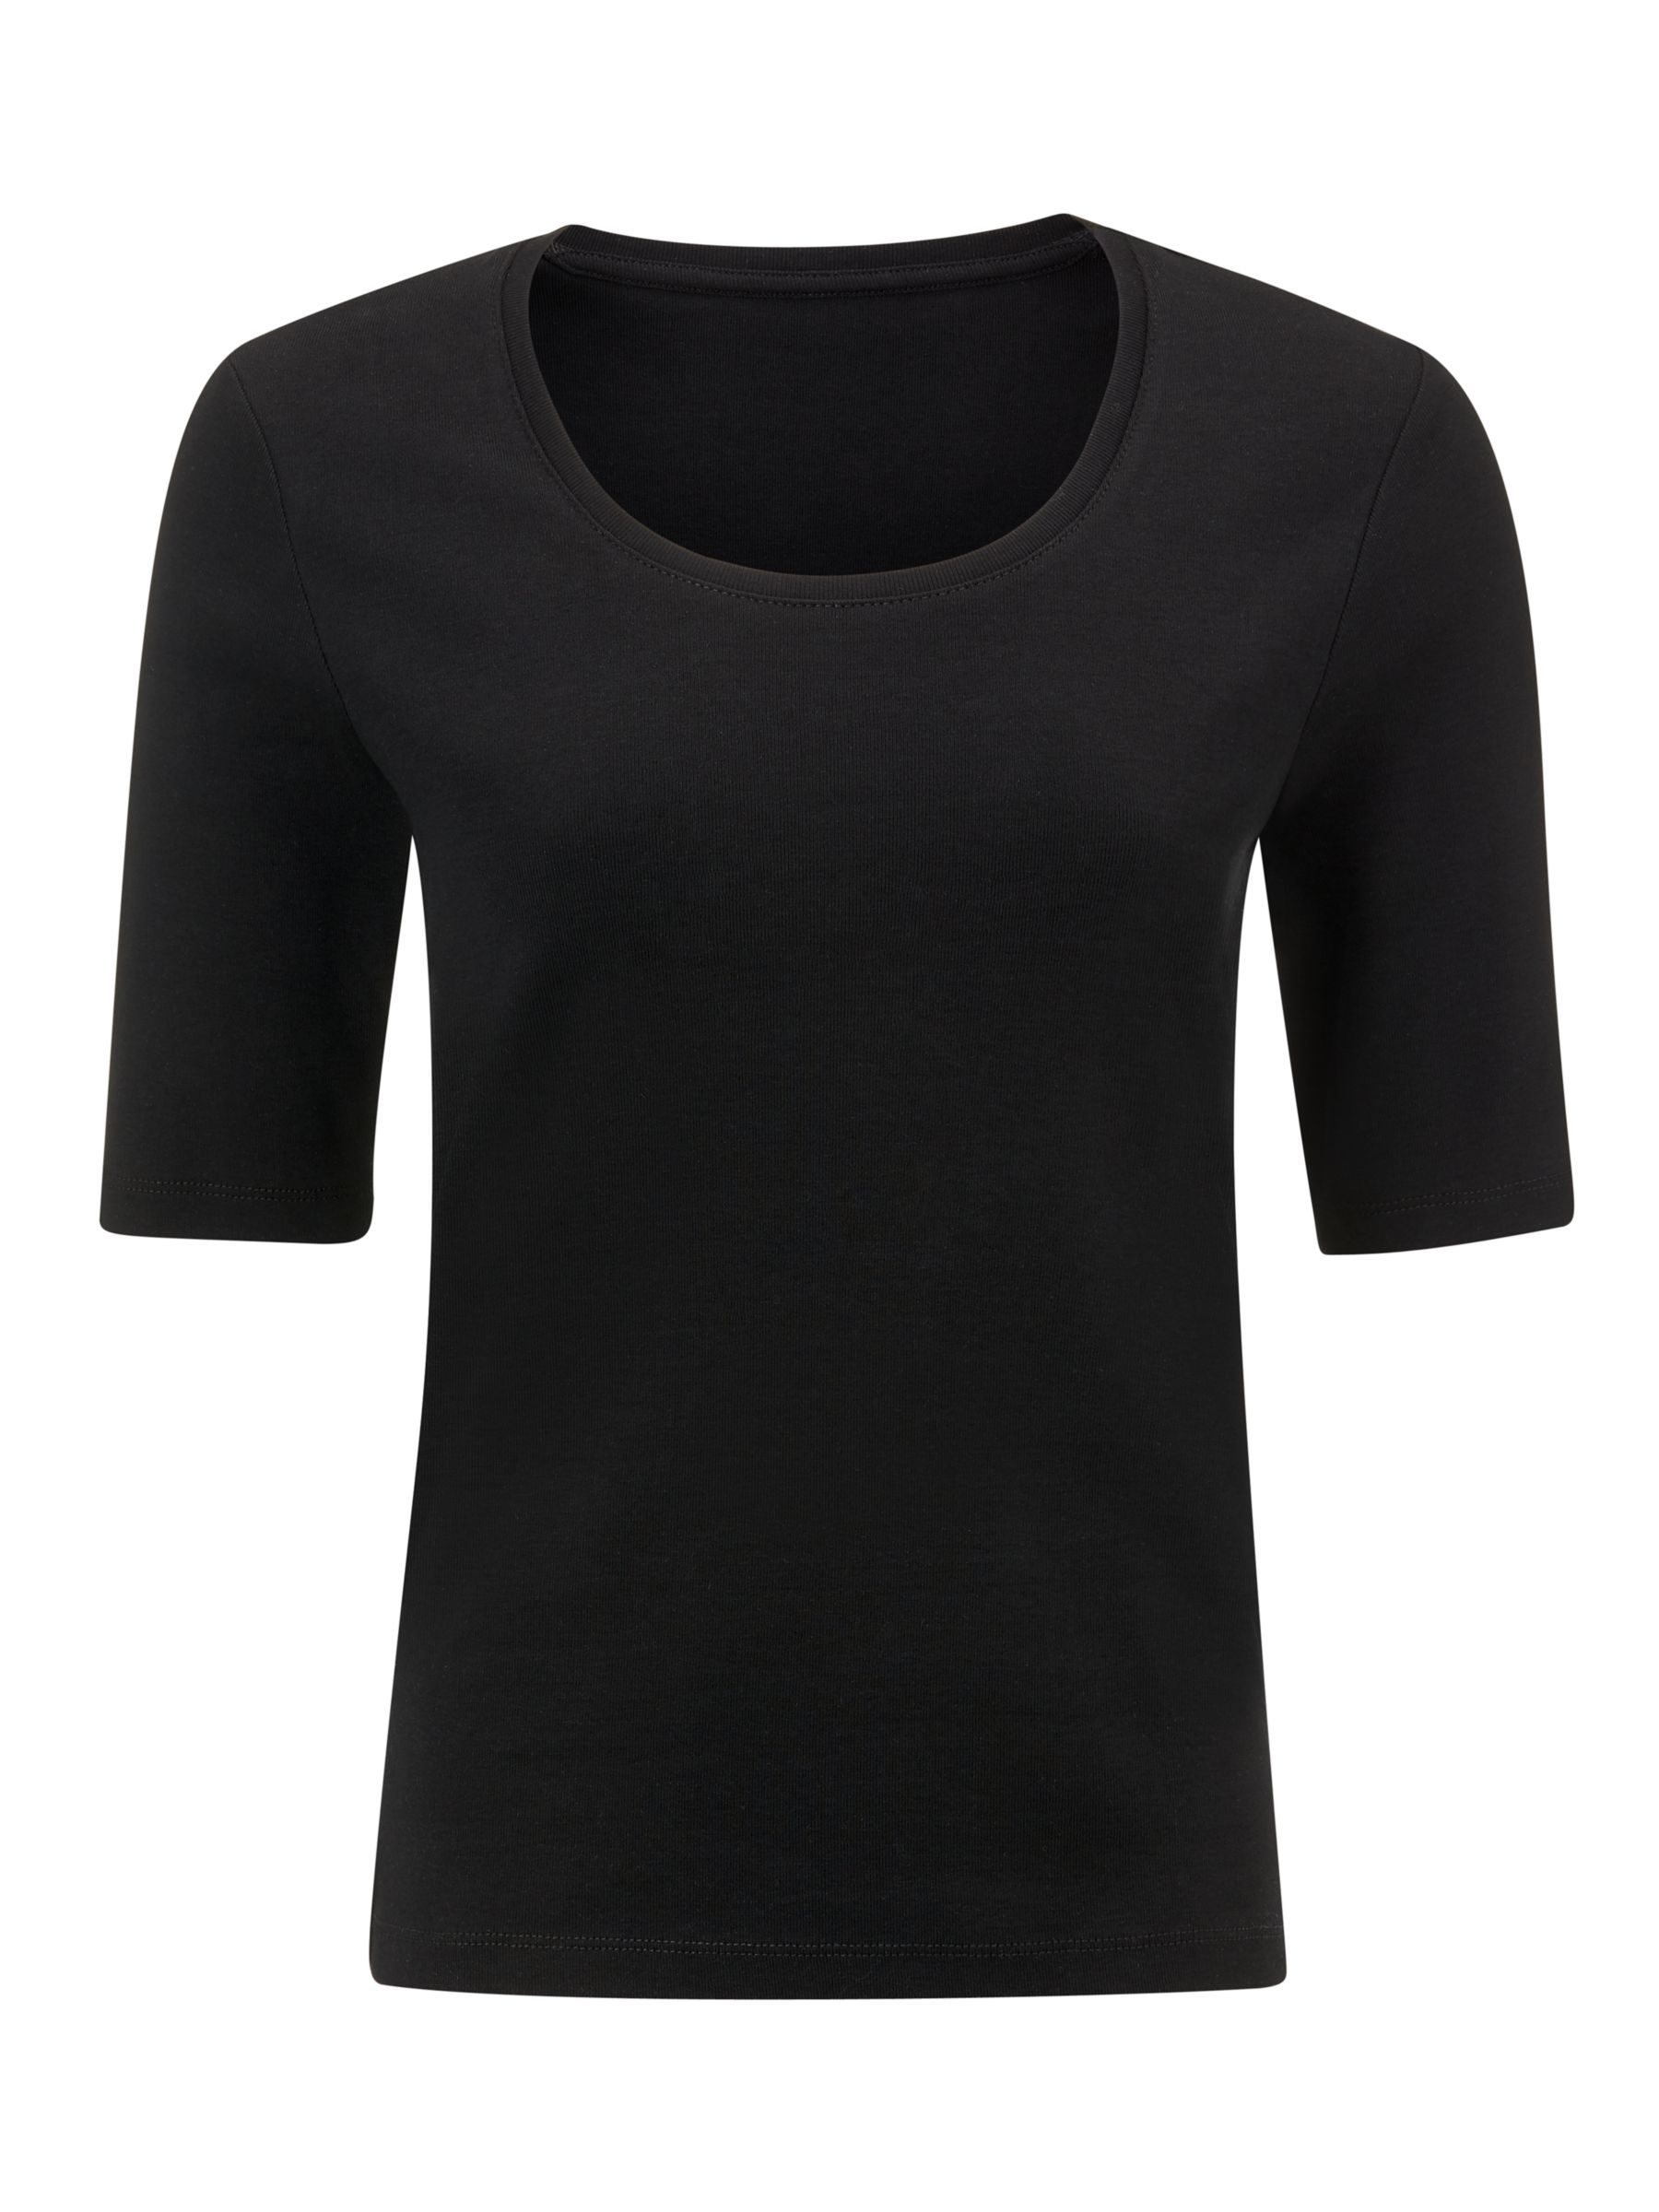 John Lewis & Partners Half Sleeve Scoop Neck T-Shirt